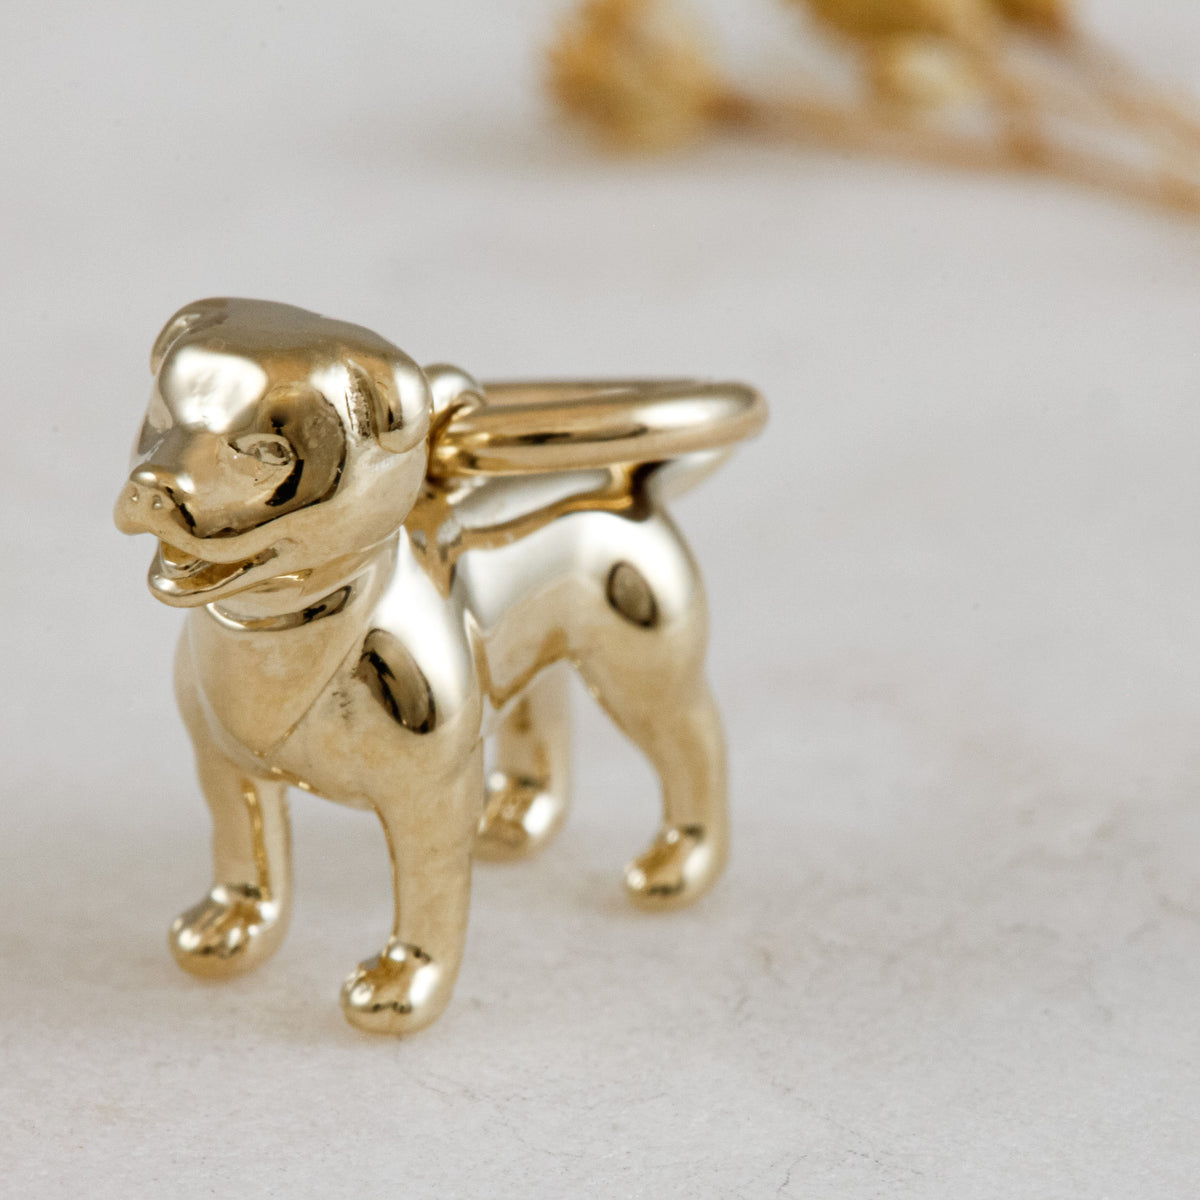 saffordshire bull terrier solid gold dog charm for a necklace or bracelet